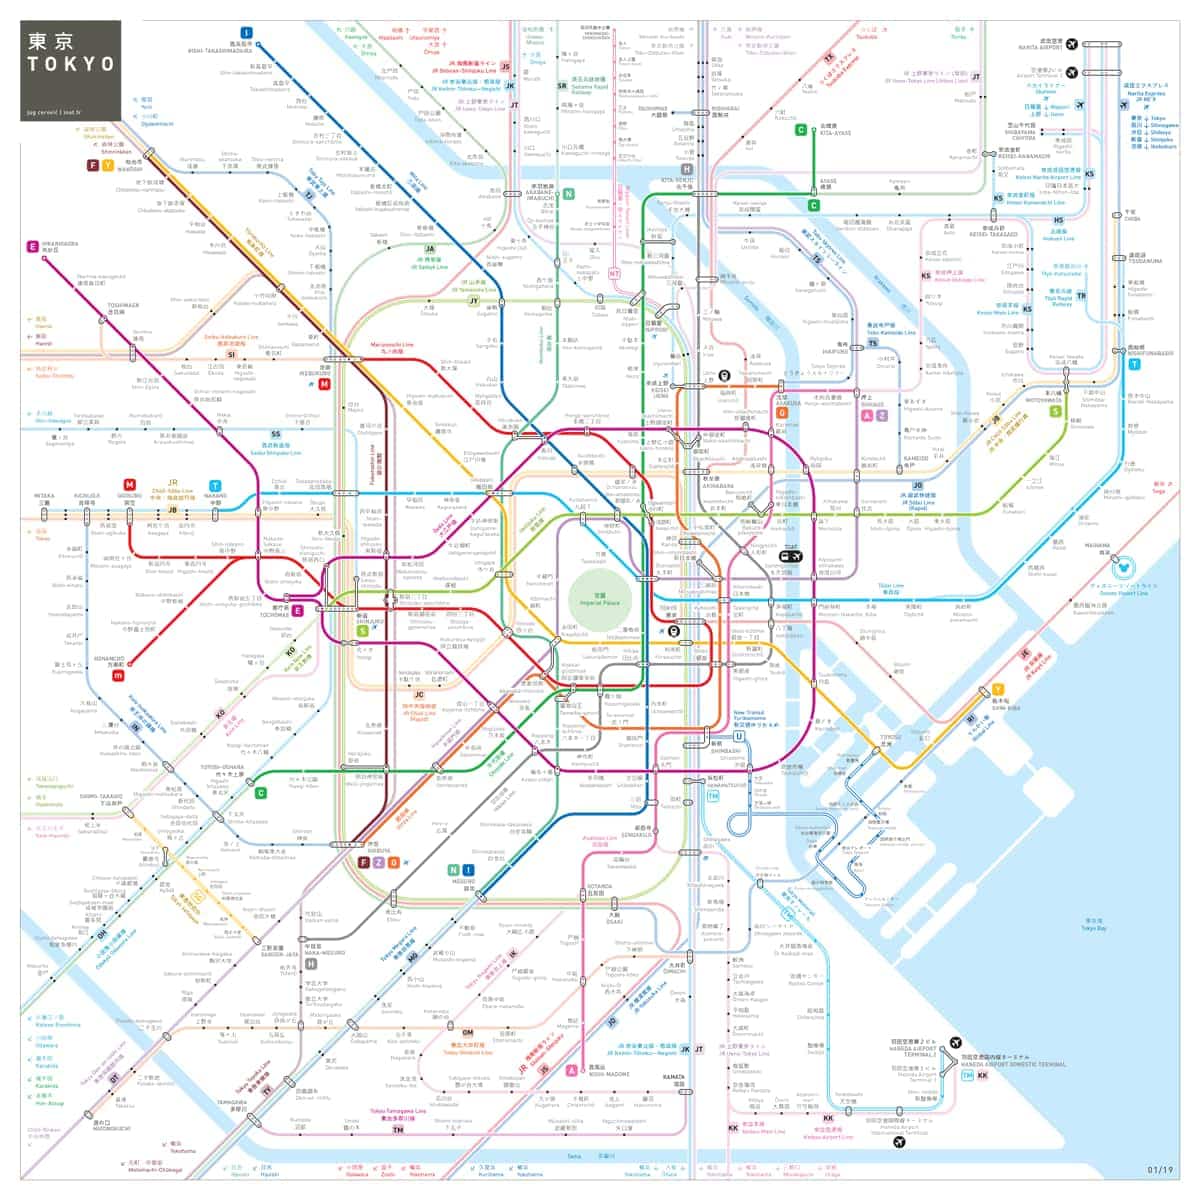 Subway map by Jug Cerovic